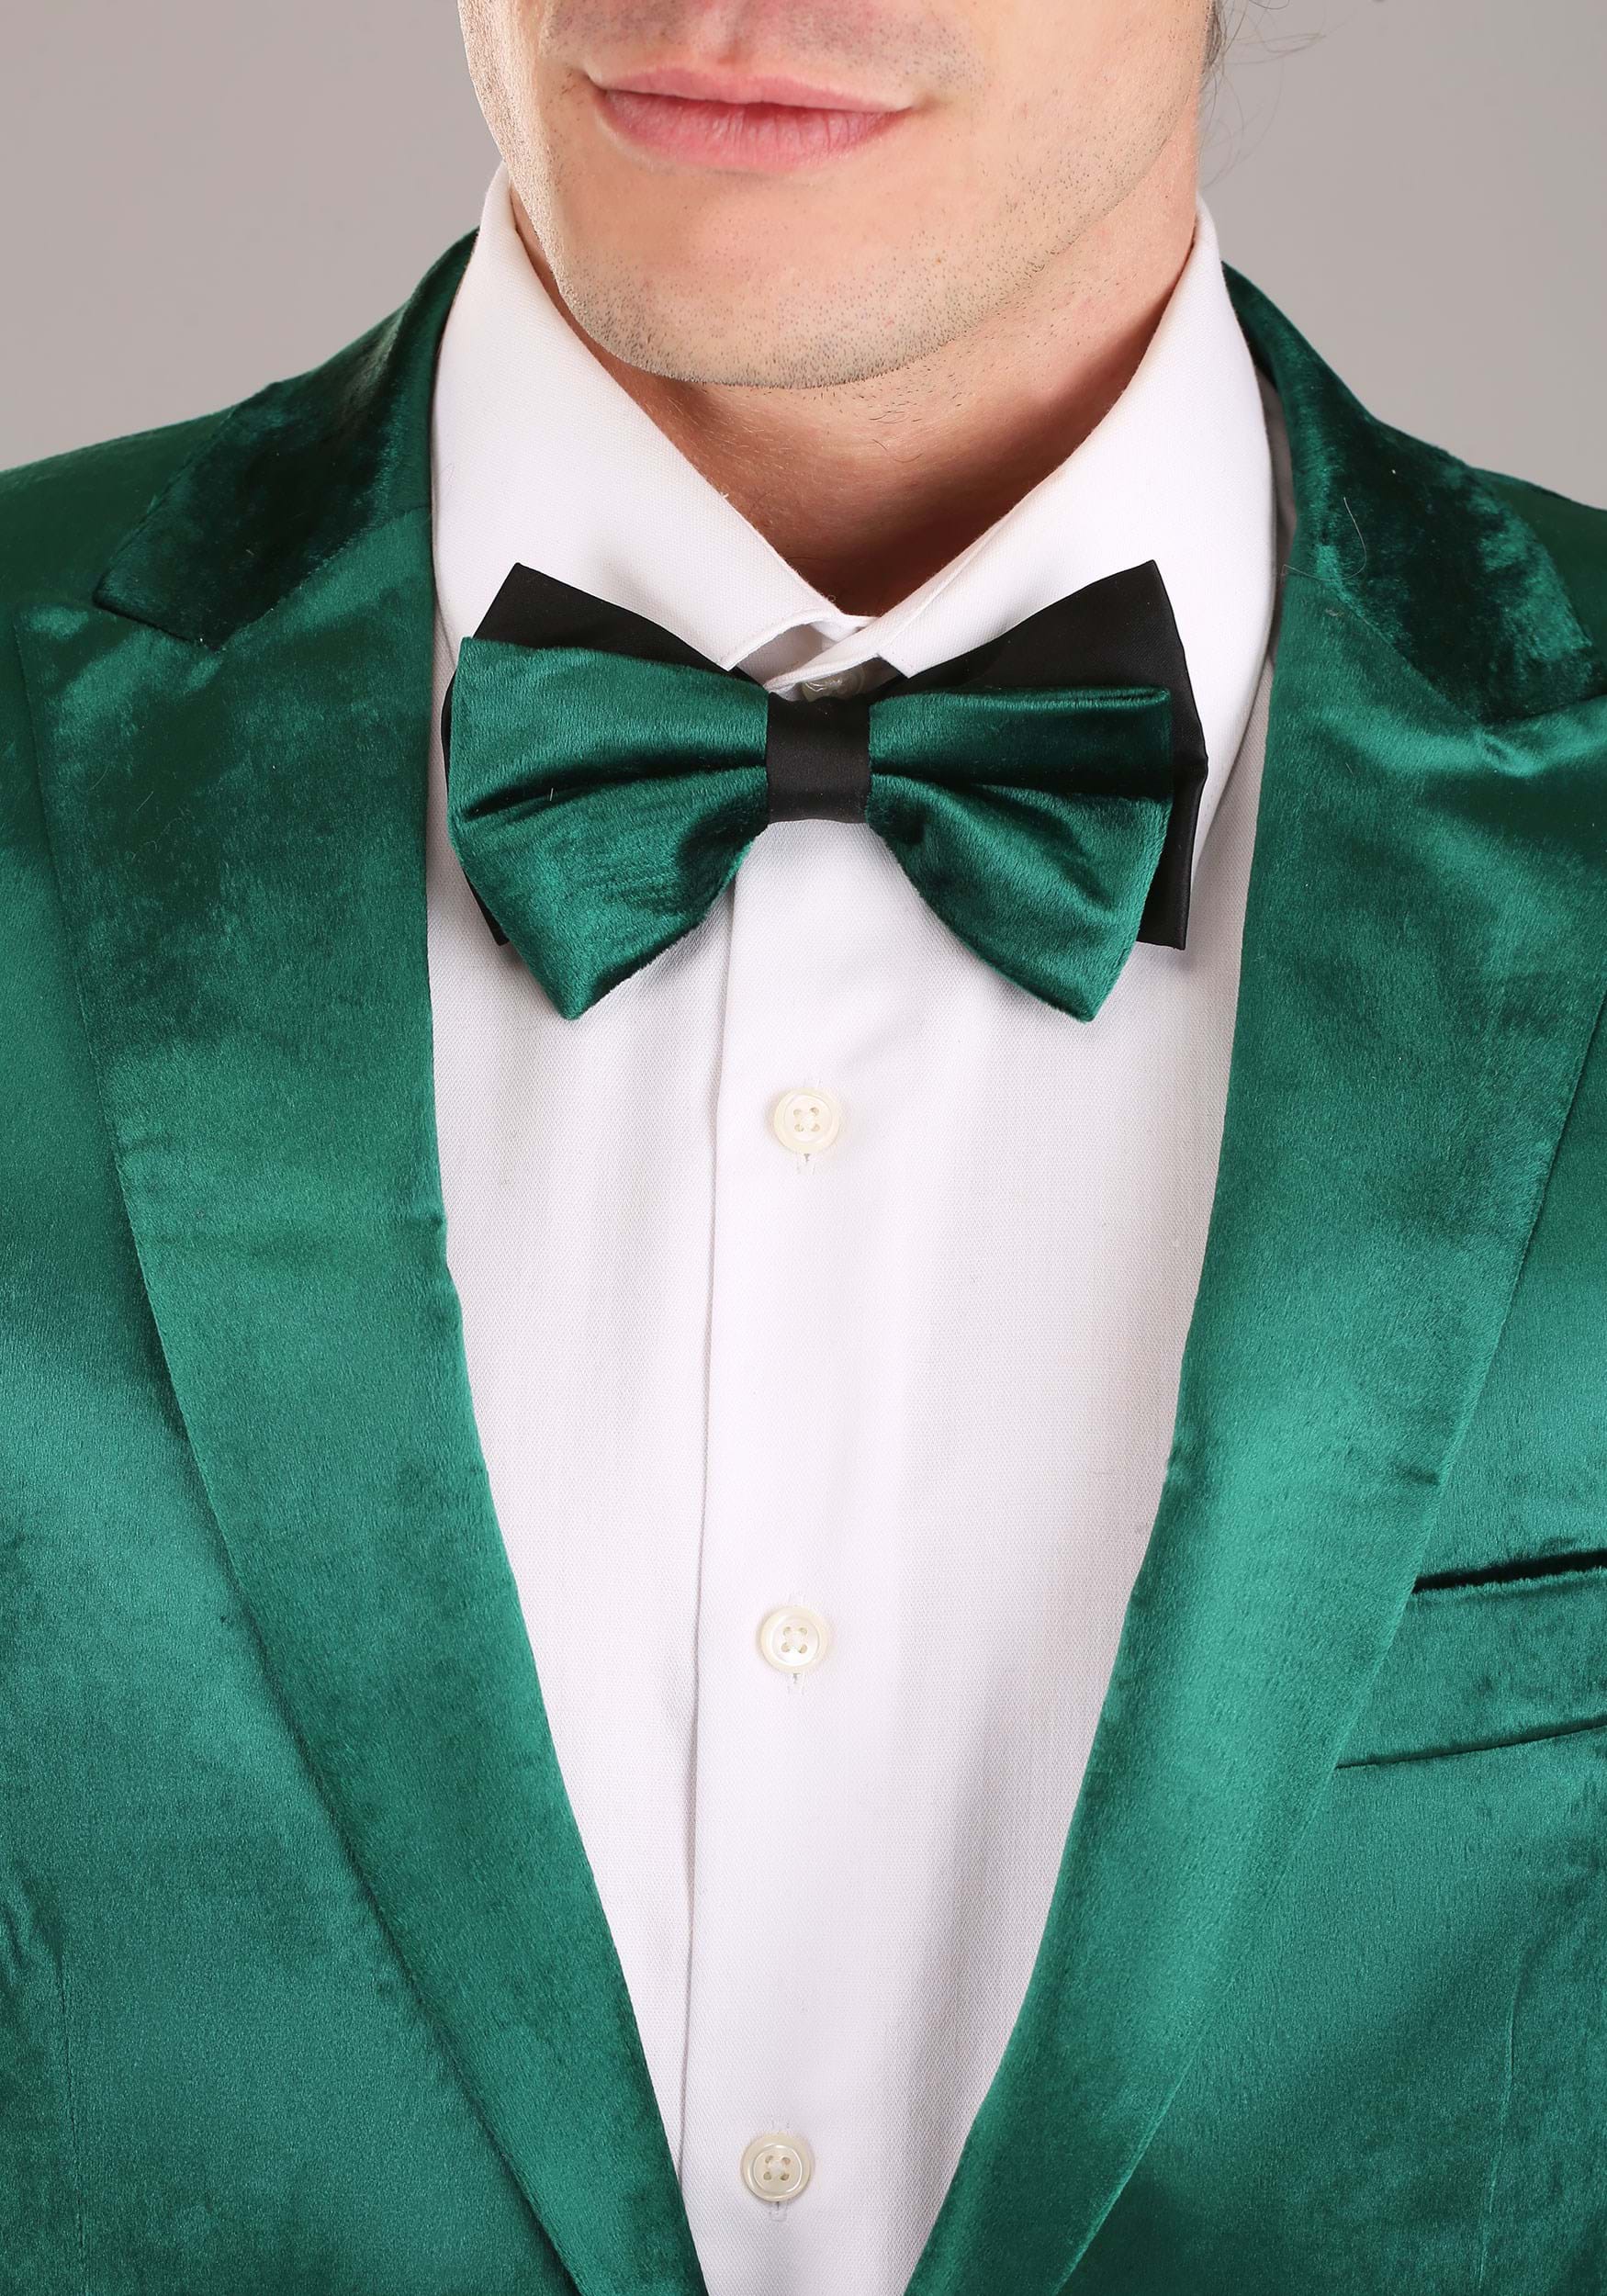 Men's Green St. Patrick's Day Leprechaun Suit Costume